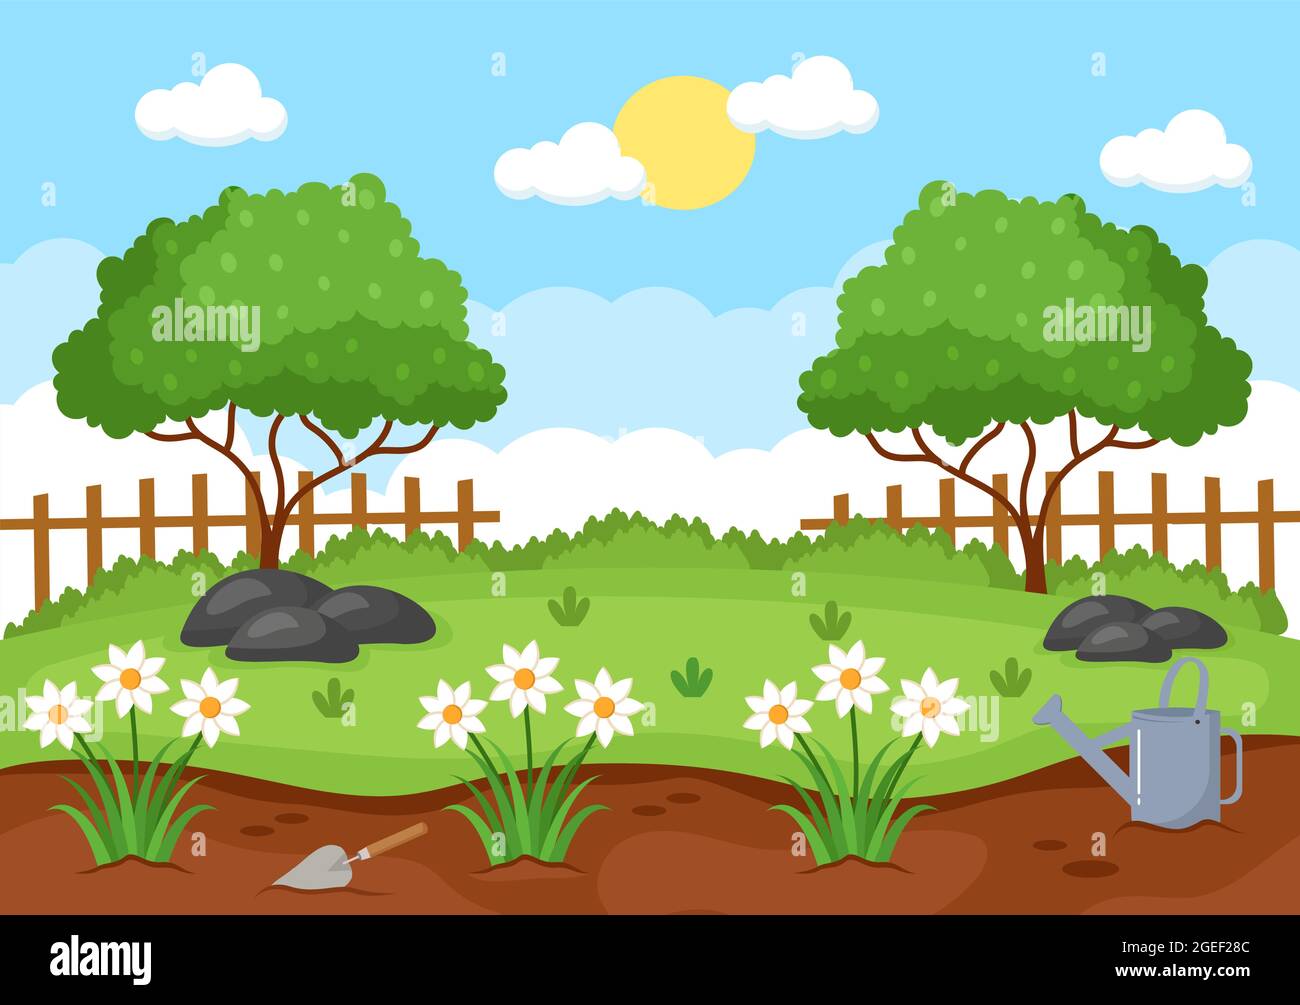 Farm Gardener Background Vector Illustration With A Landscape Of Gardens,  Flowers, Vegetables Planted, Wheelbarrow, Shovel And Equipment in Design  Stock Vector Image & Art - Alamy